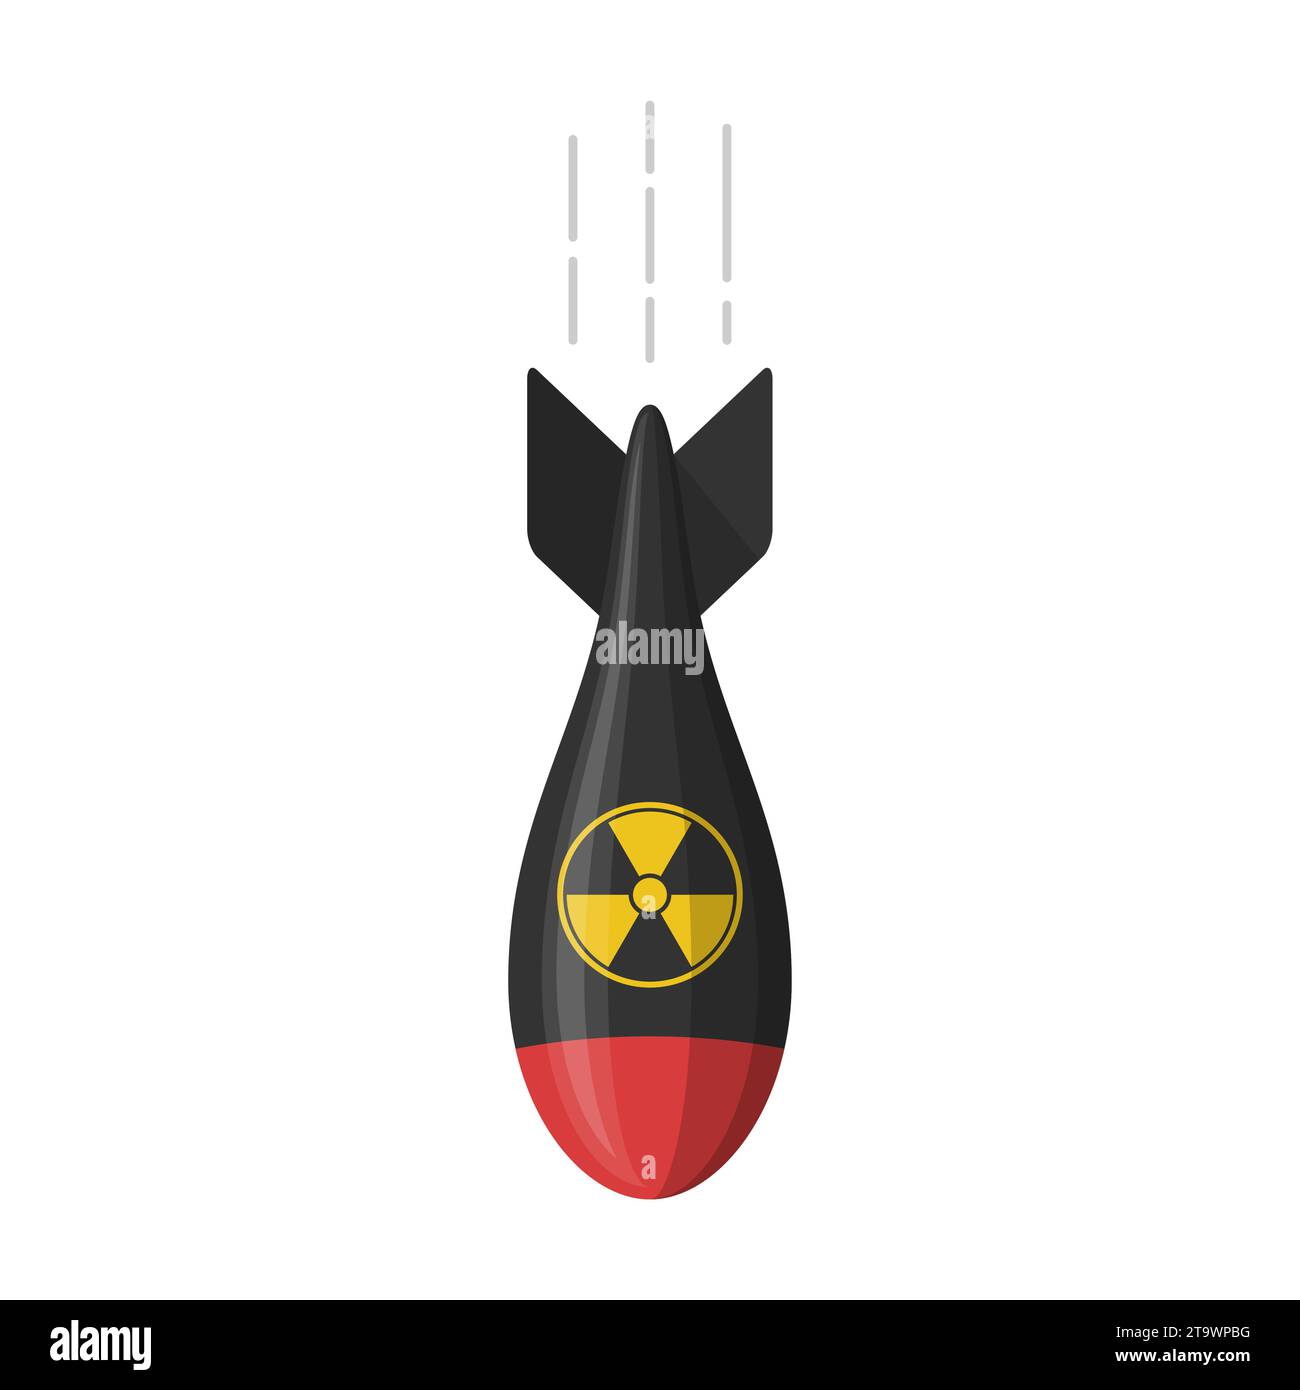 Atombombe isoliert auf weißem Hintergrund. Atomraketen-Luftbombe. Bombshell, Raketenarmee. Illustration des Vektors der Atomstrahlung. Stock Vektor